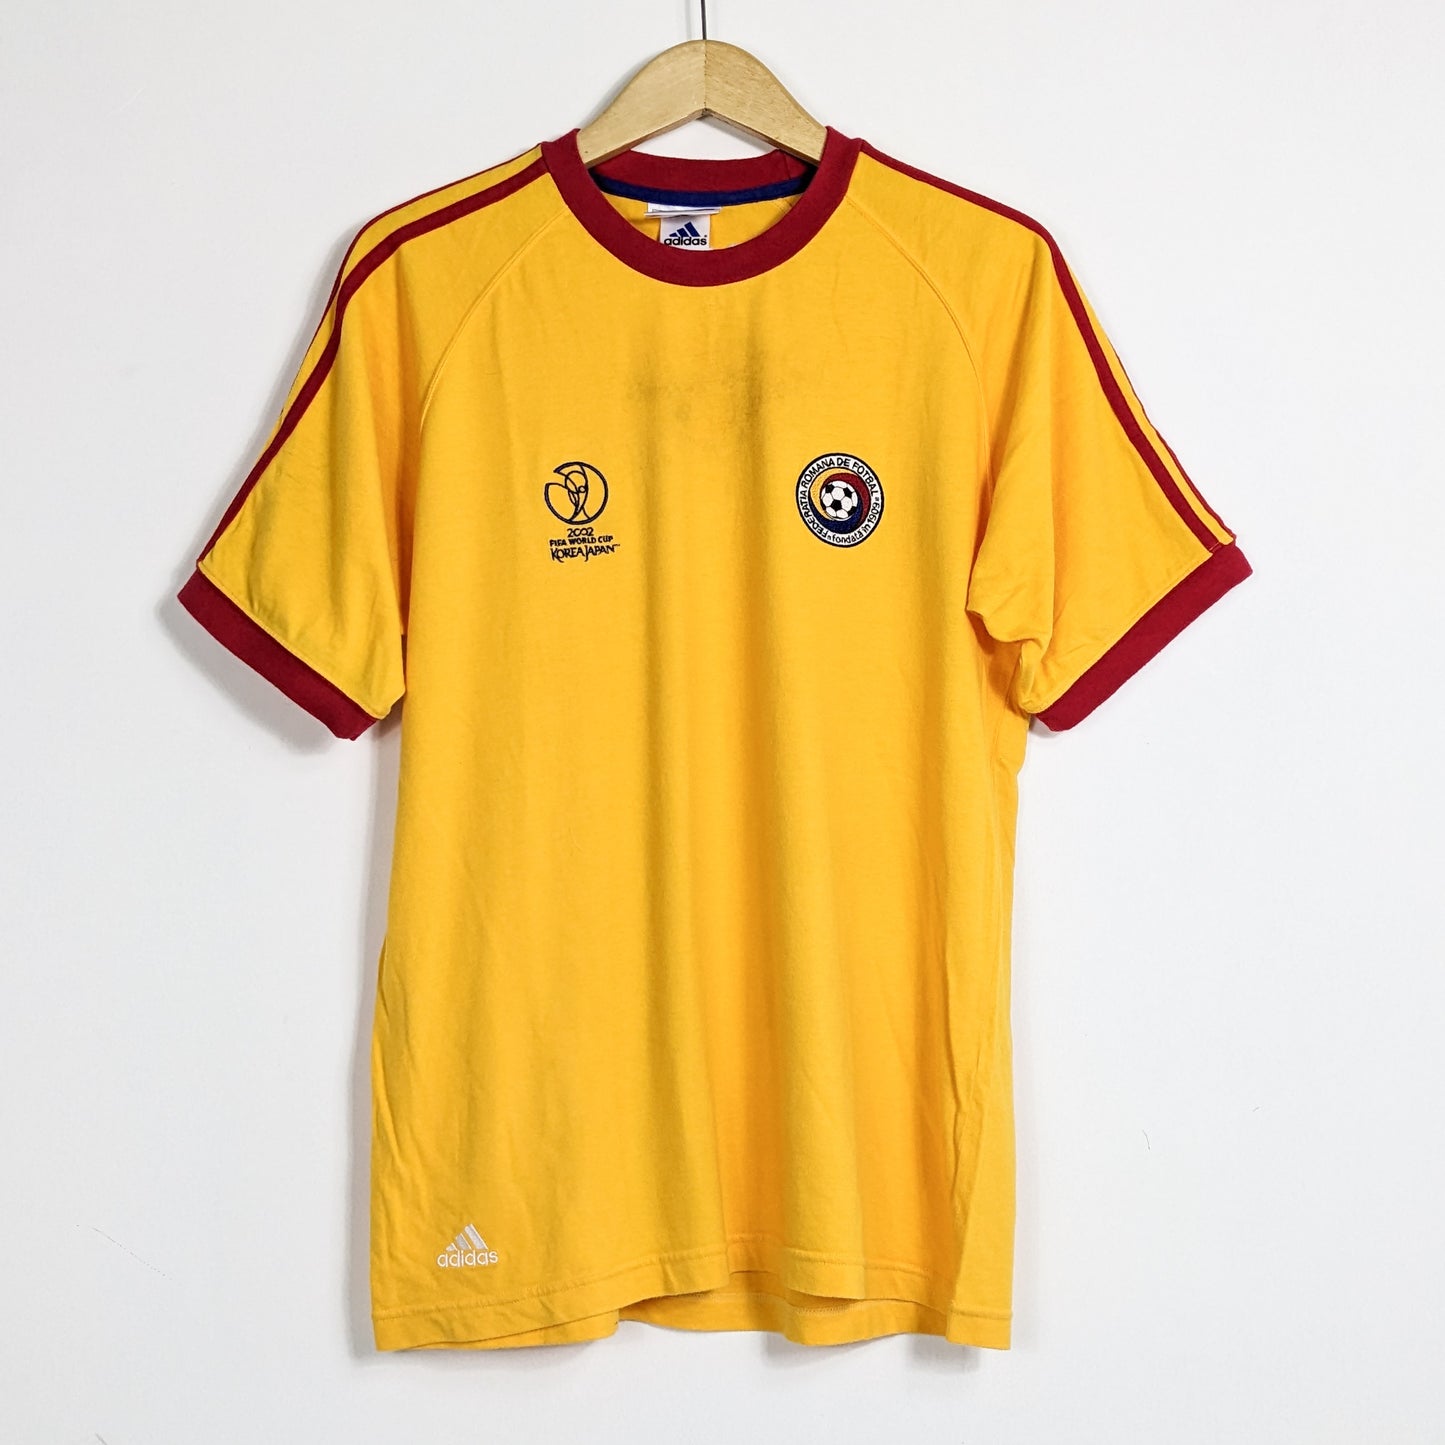 Authentic Romania 2002 Shirt - Size S fit M